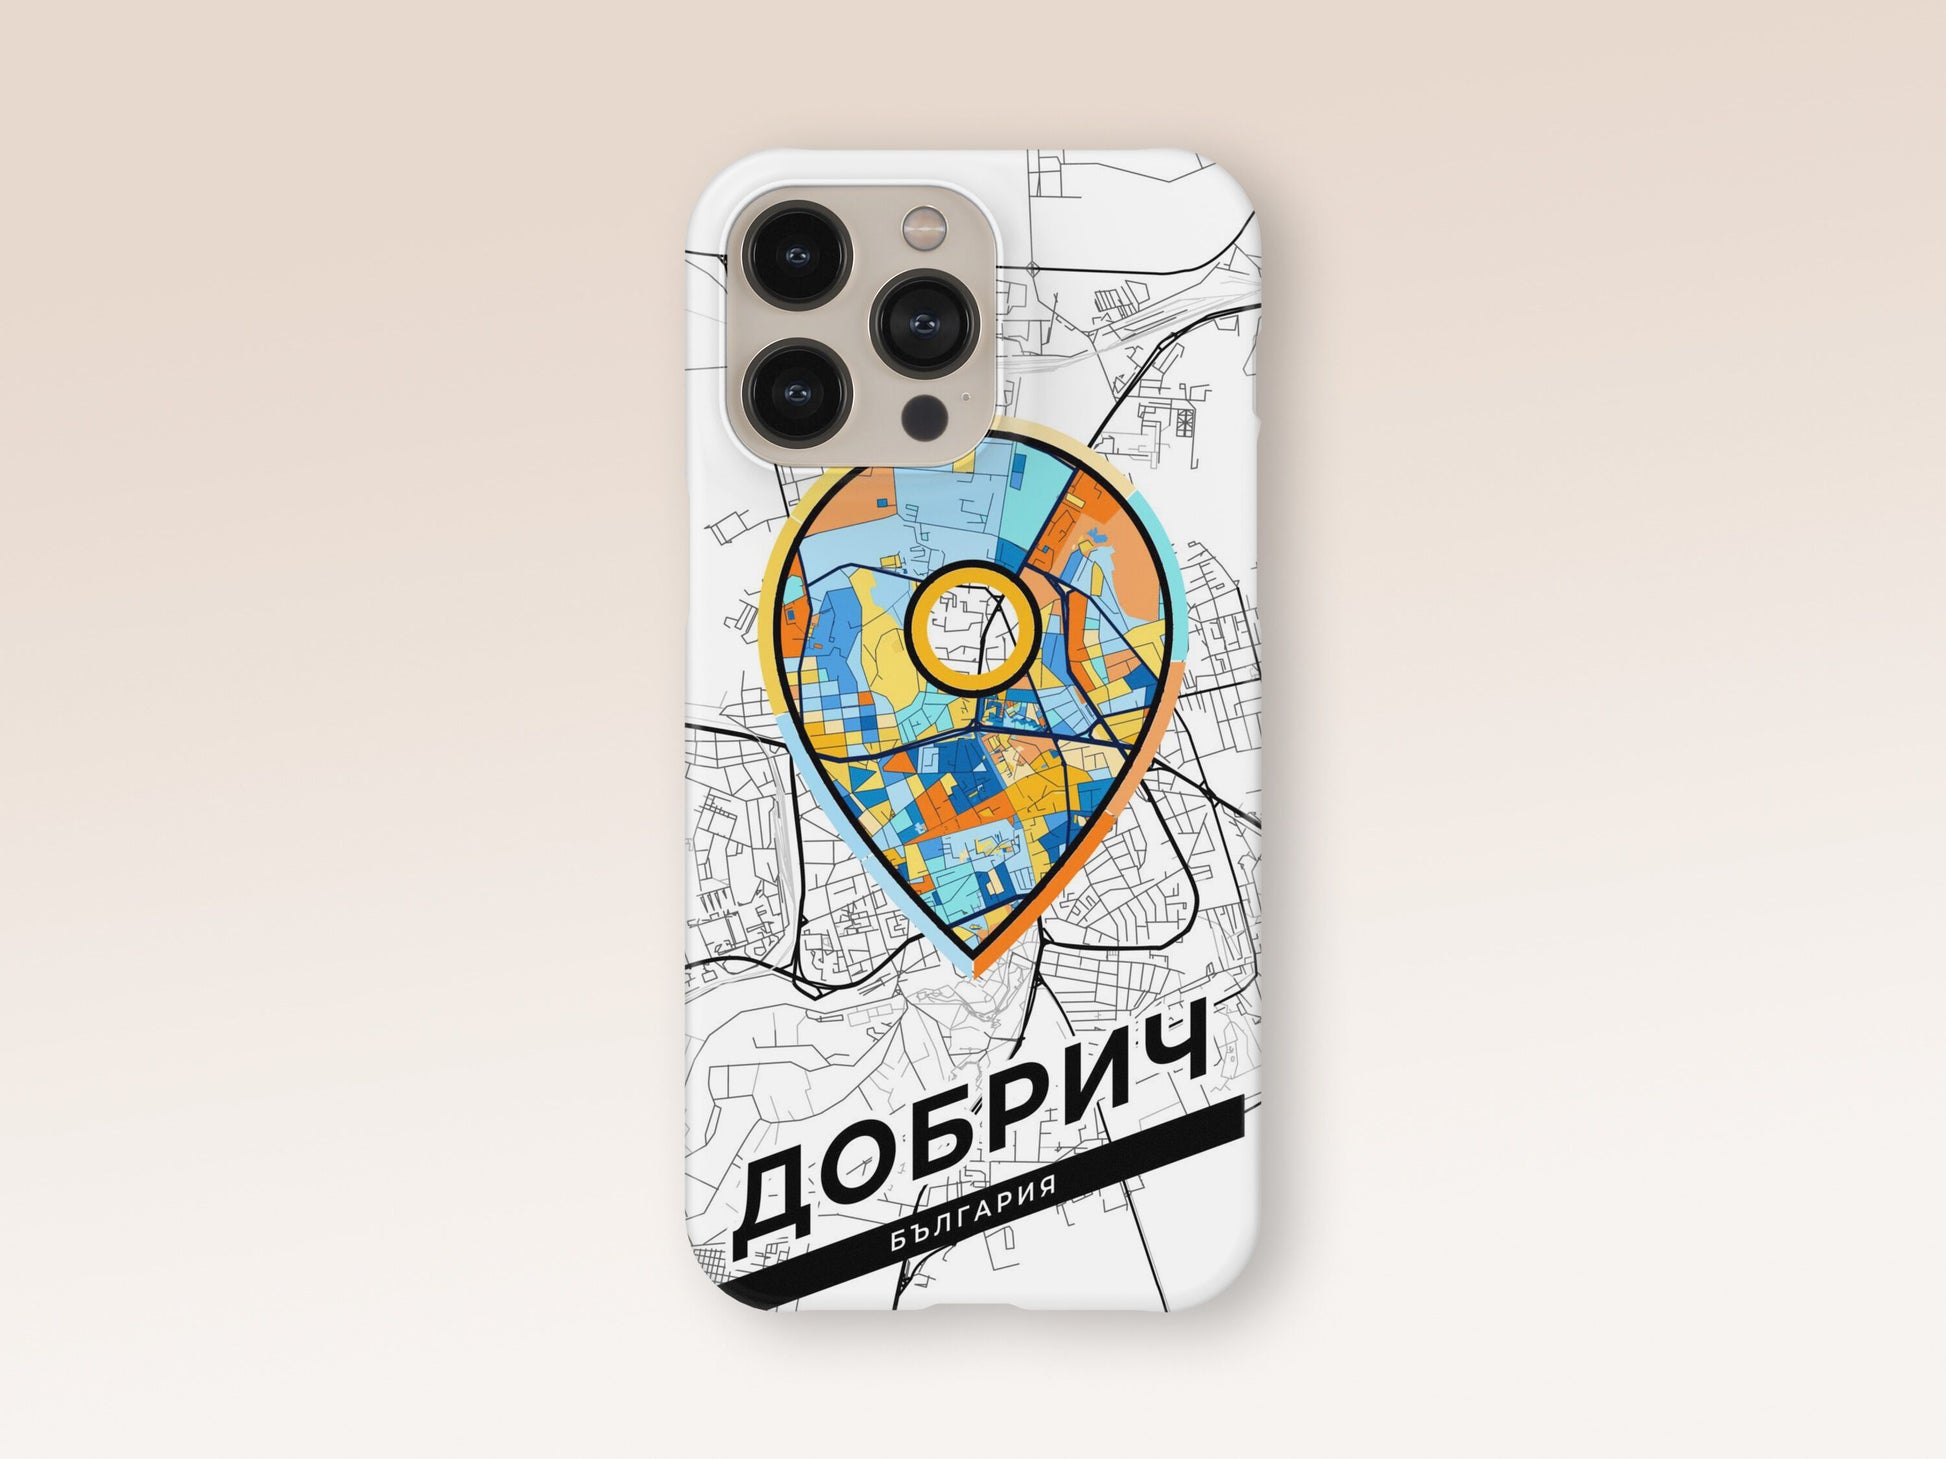 Добрич България slim phone case with colorful icon. Birthday, wedding or housewarming gift. Couple match cases. 1